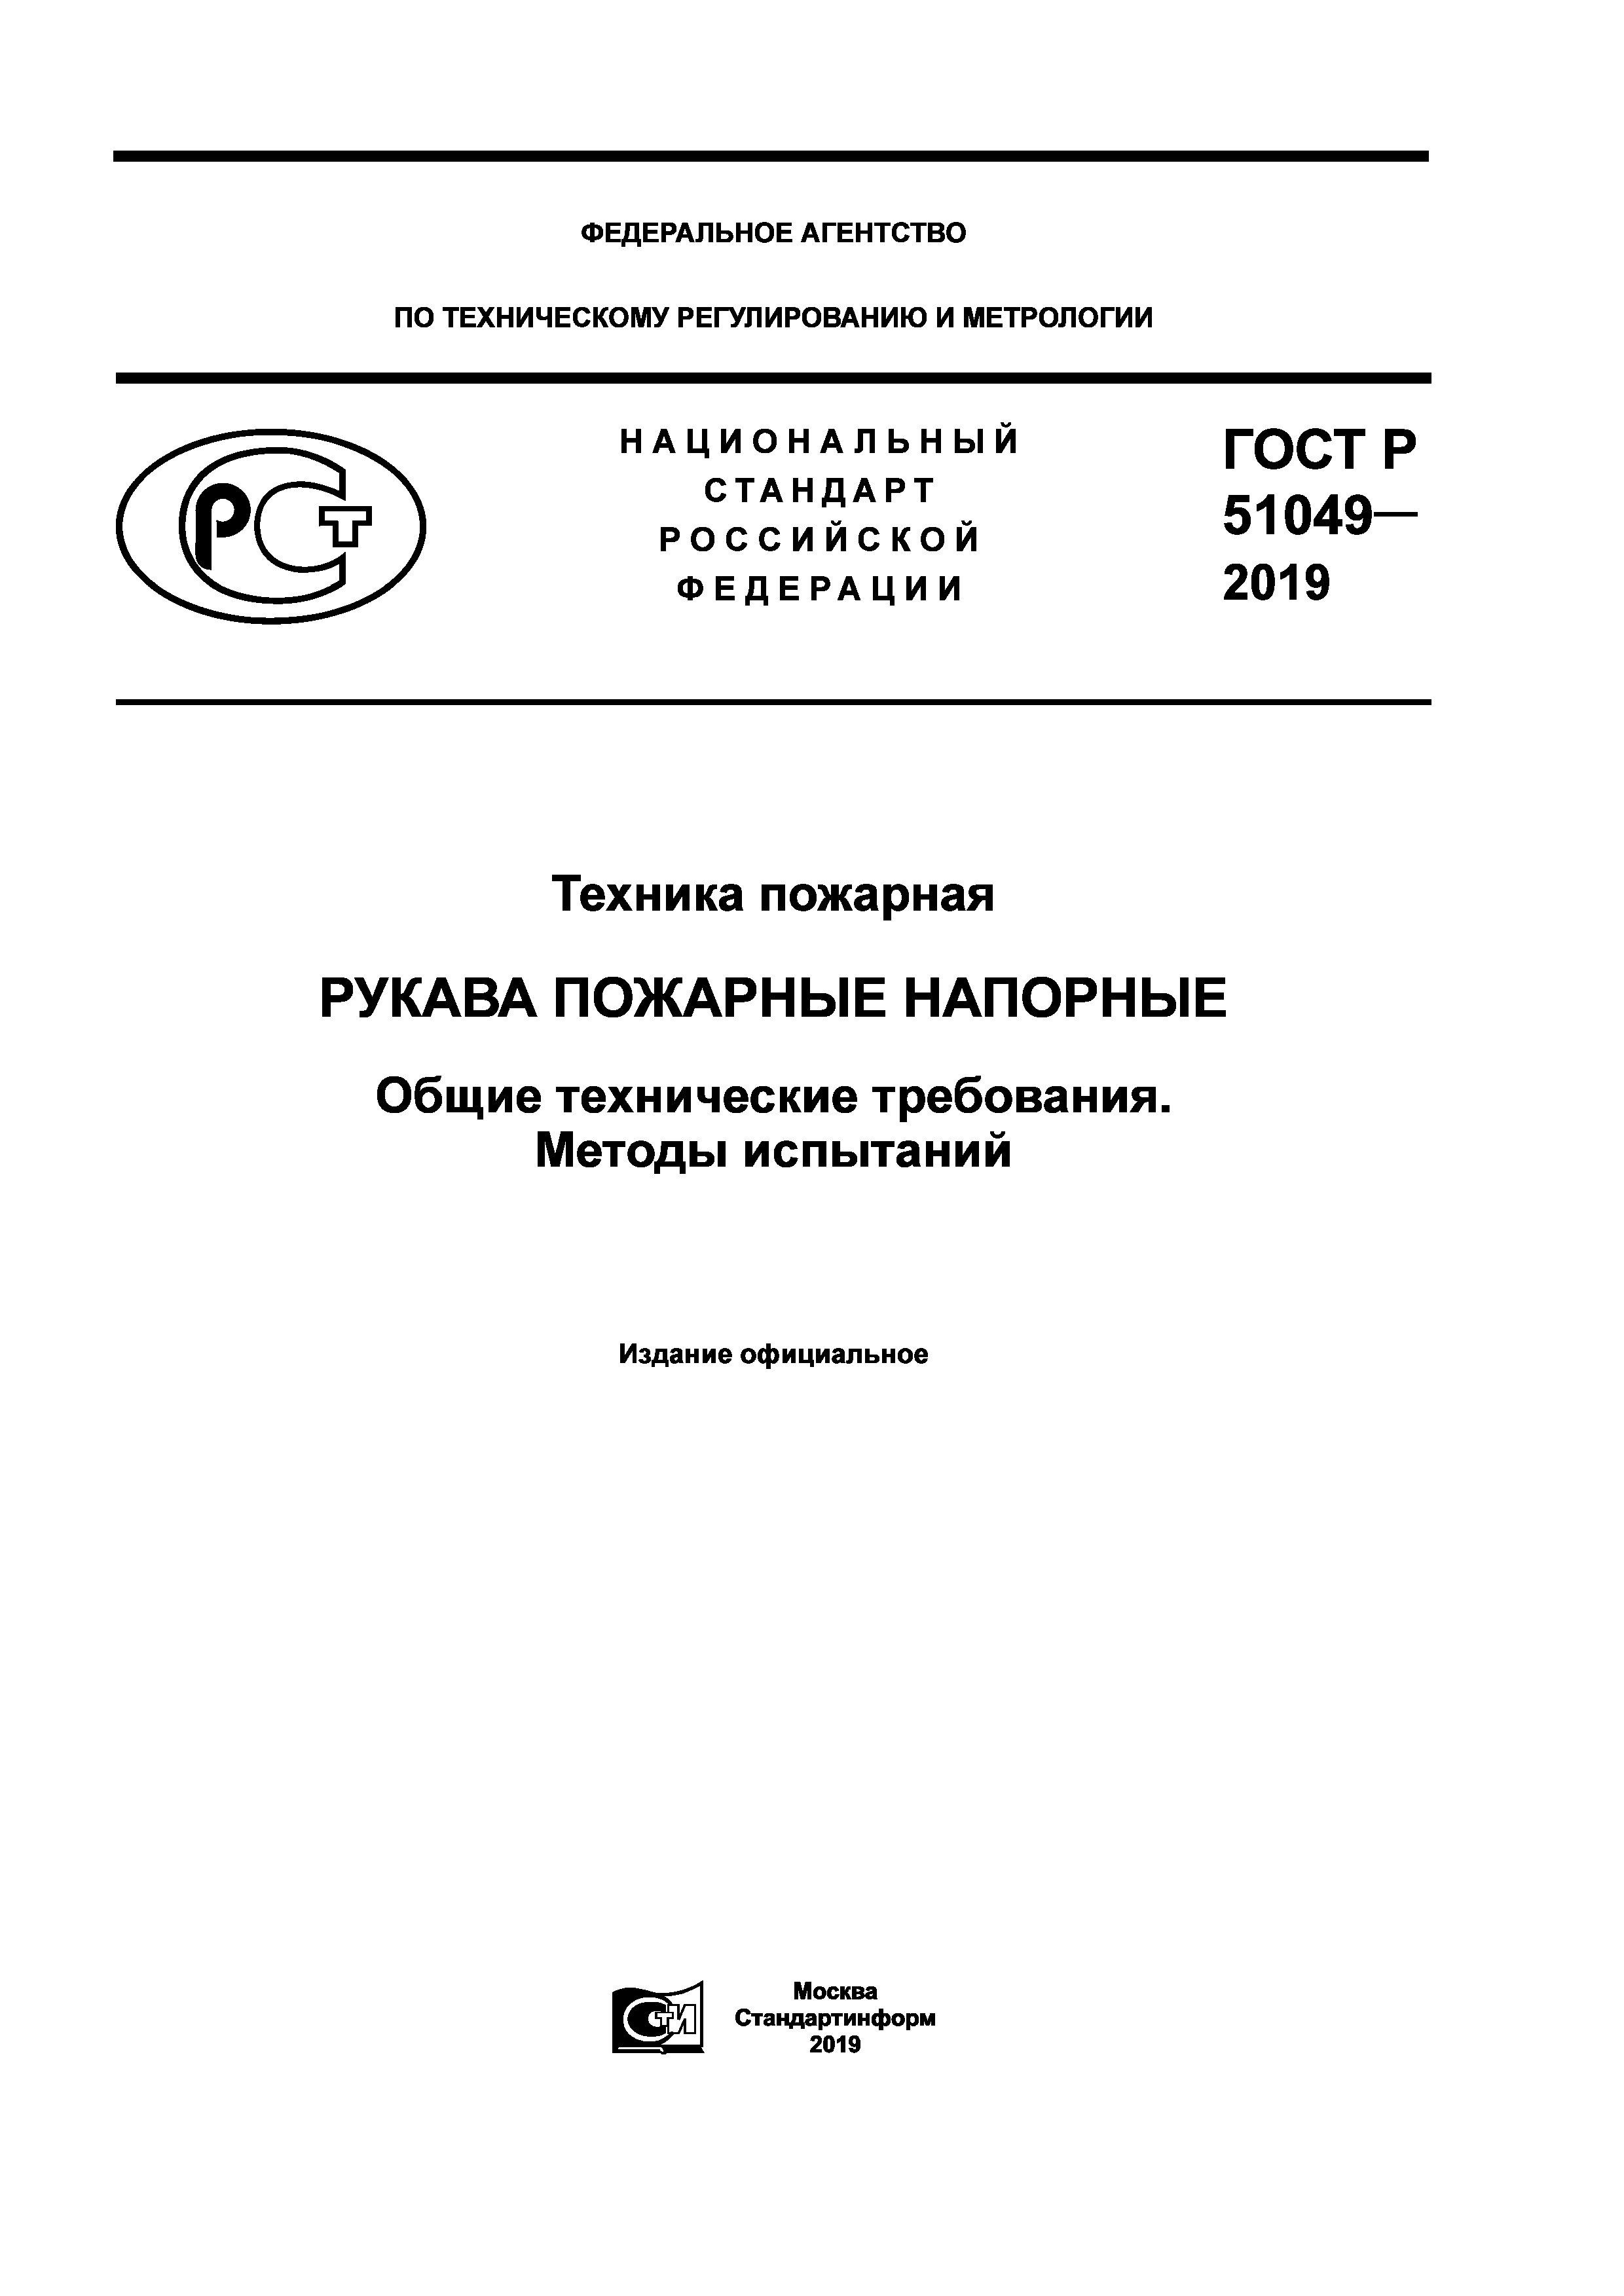 ГОСТ Р 51049-2019